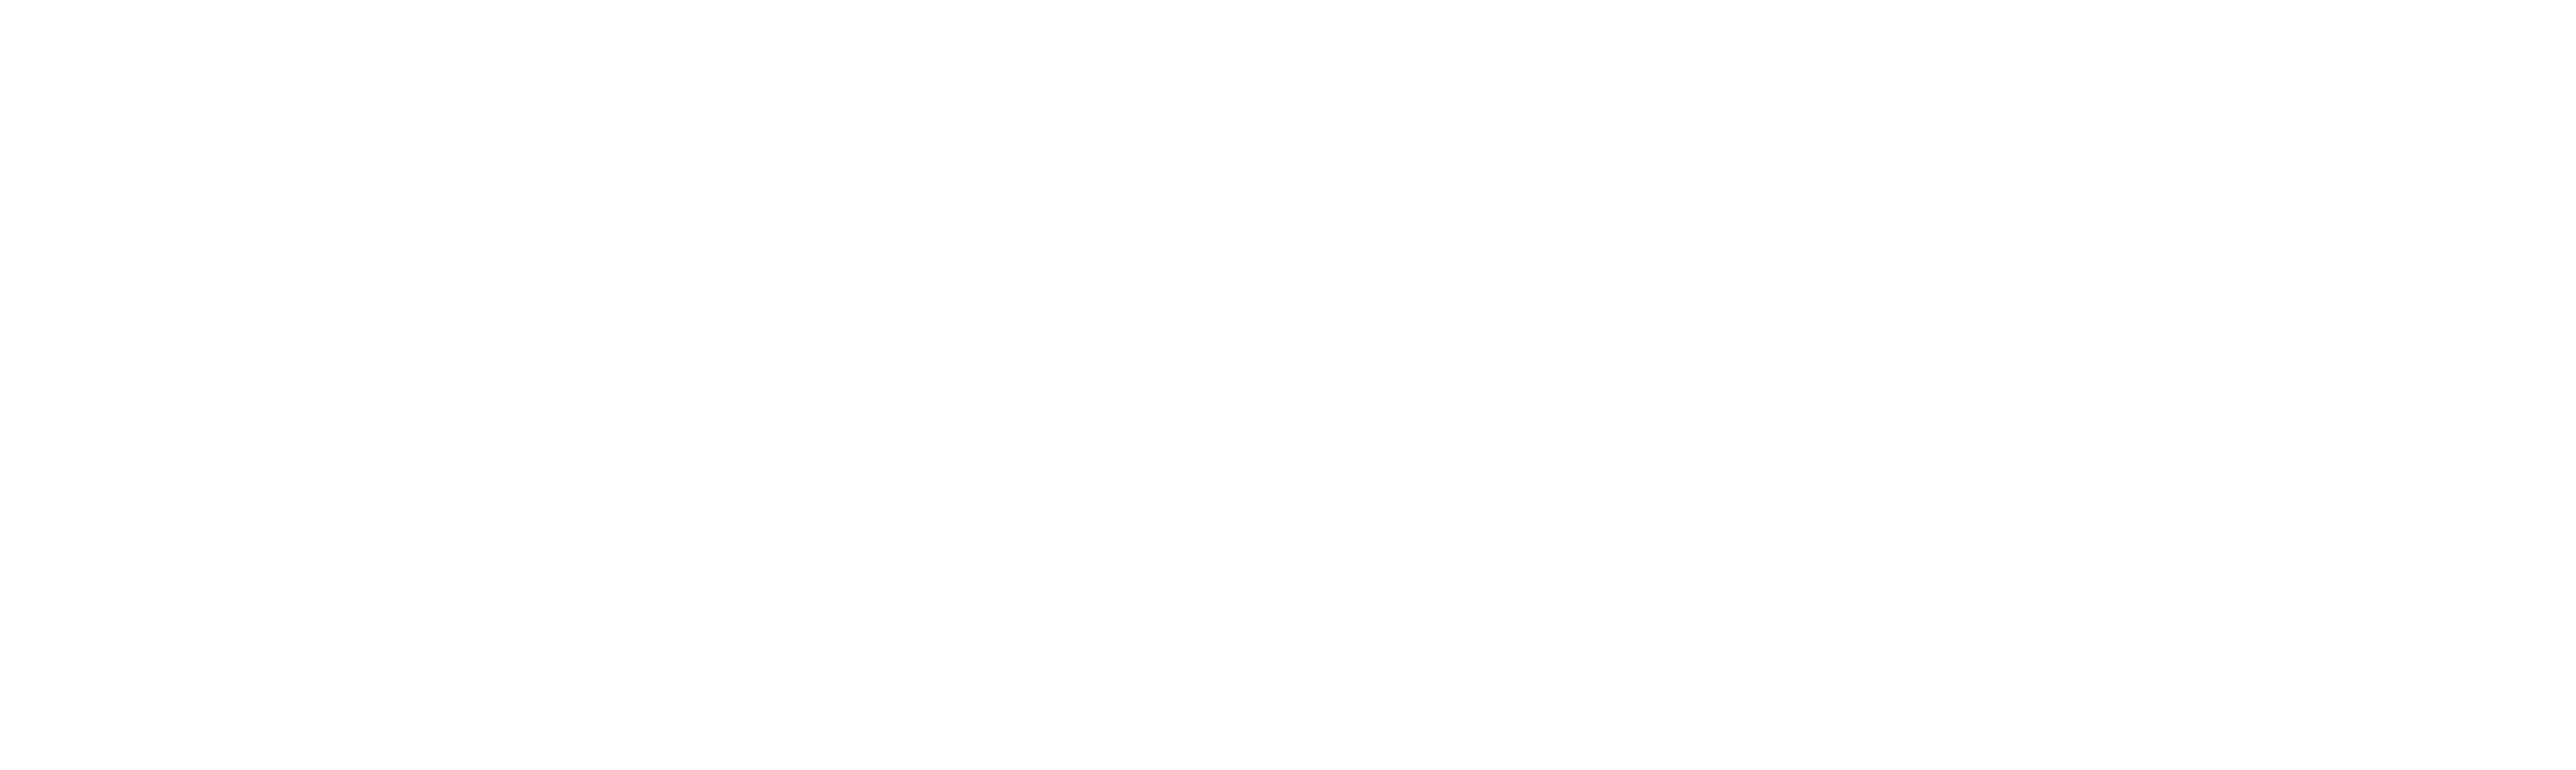 Top Quality Manufacturing Glove World logo